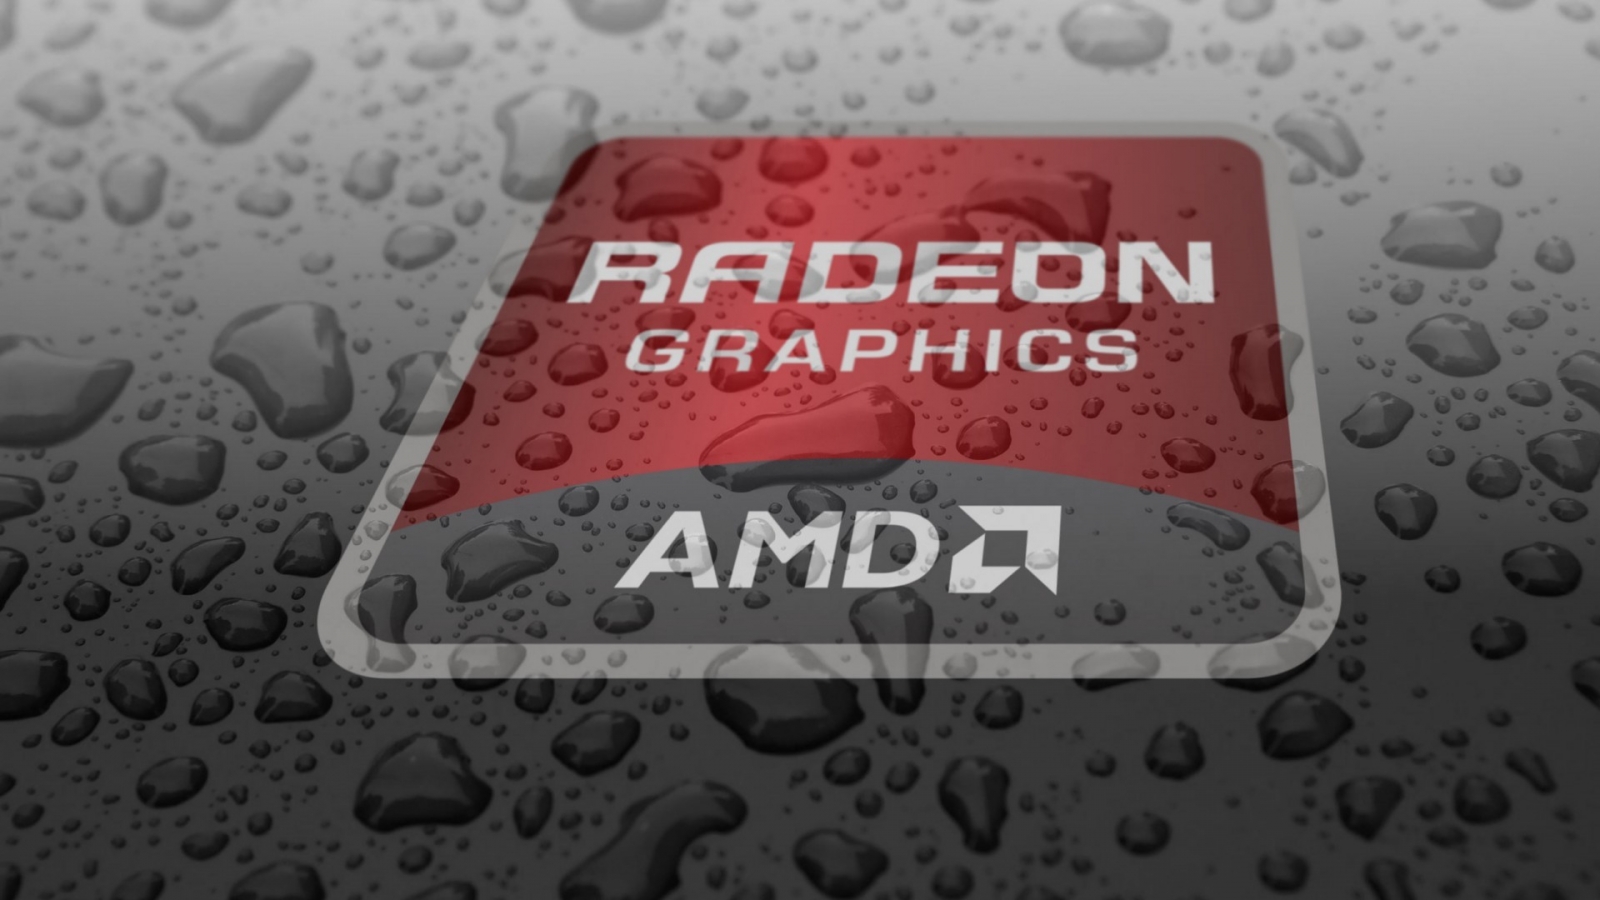 Radeon Graphics AMD for 1600 x 900 HDTV resolution